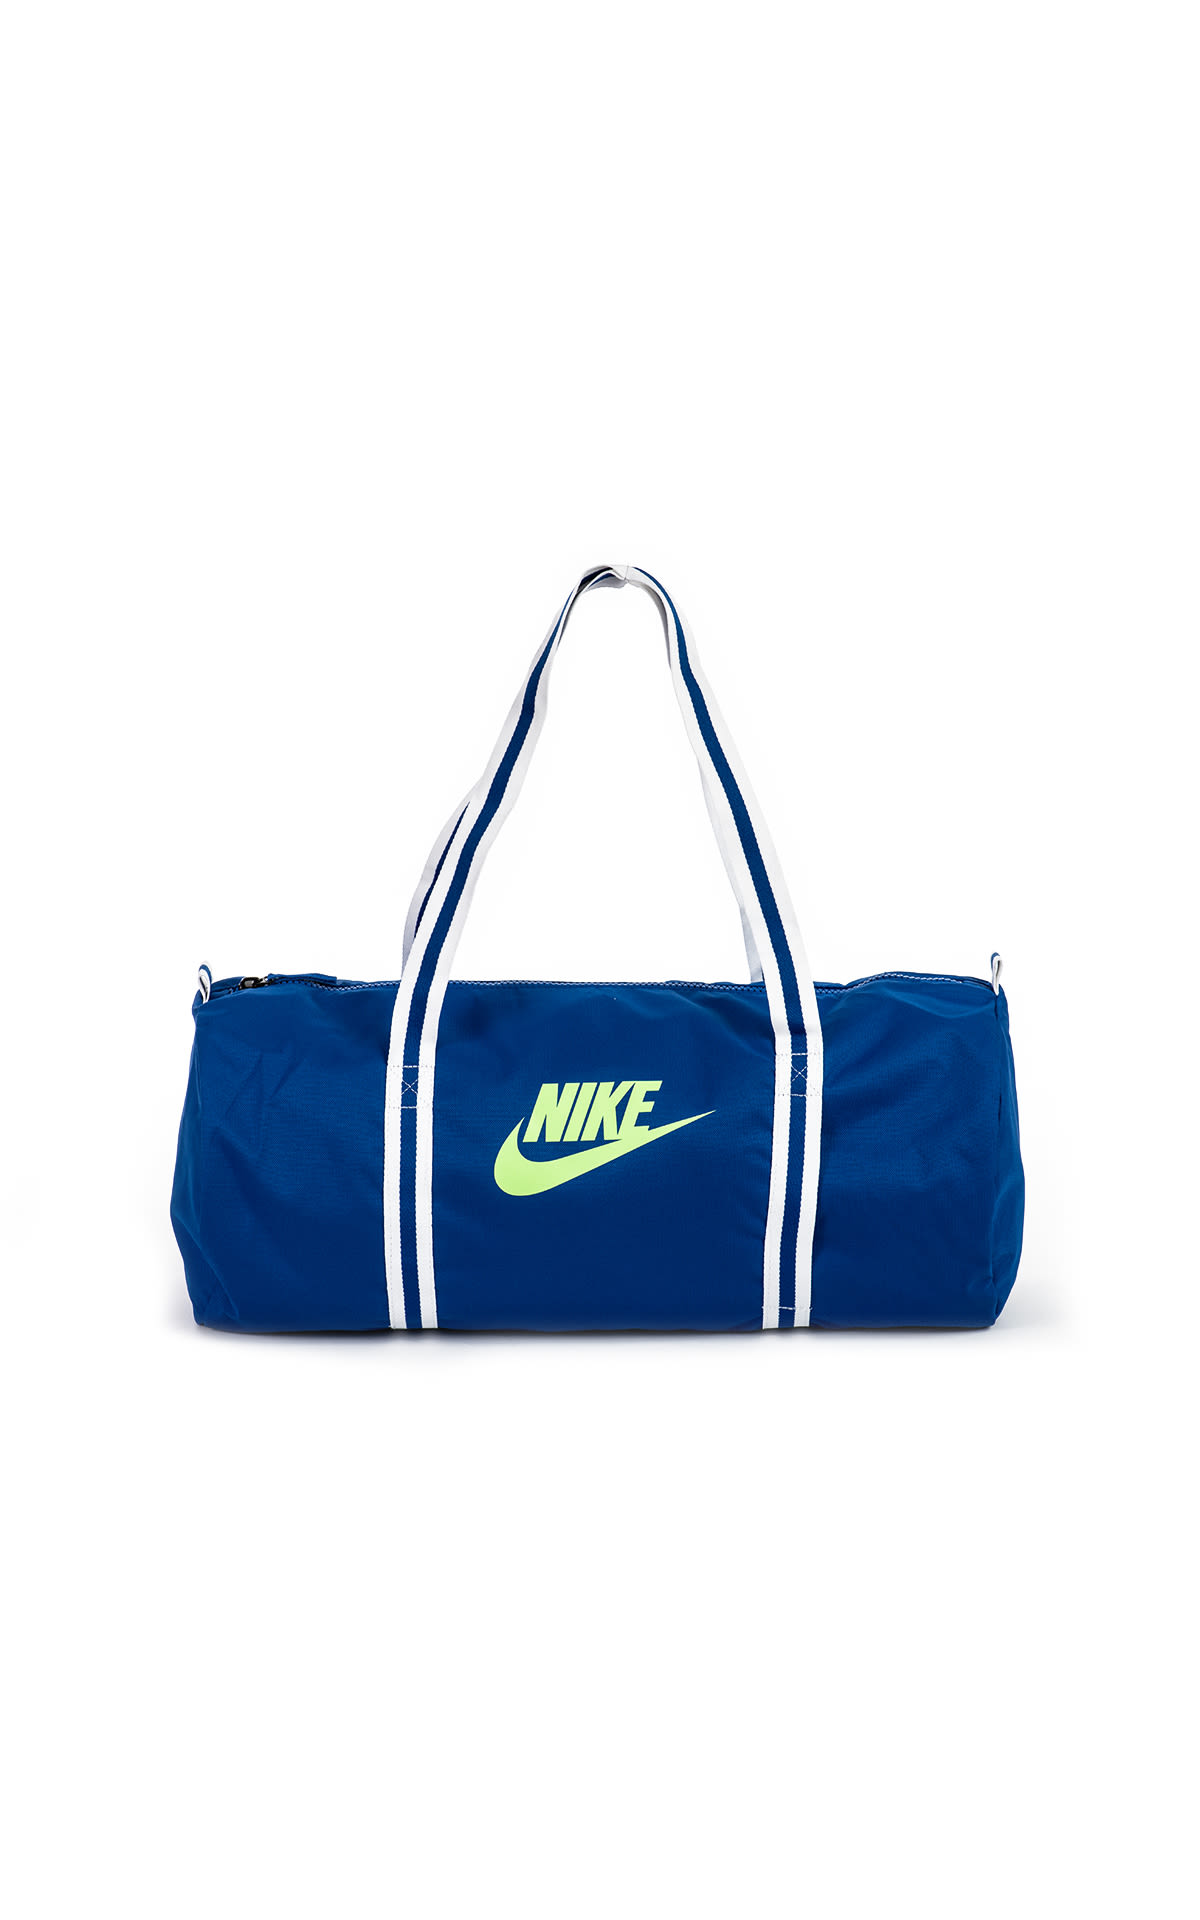 Nike Heritage duffle bag